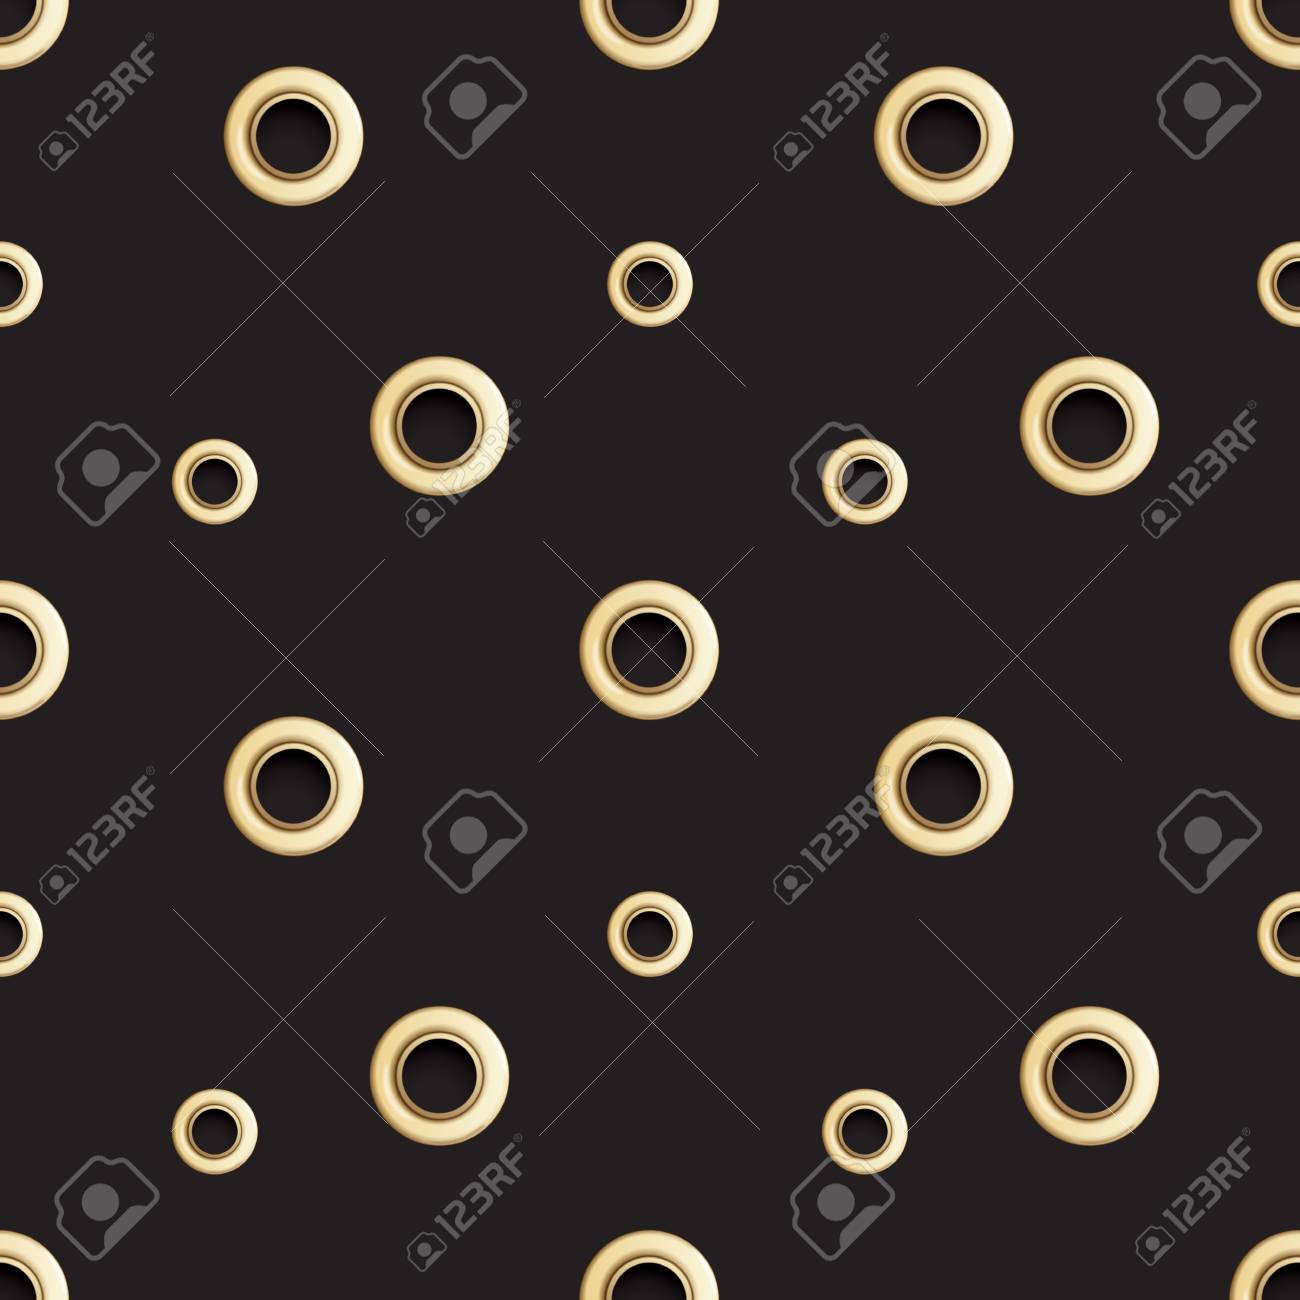 Golden Eyelet Seamless Pattern Isolated On Black Background